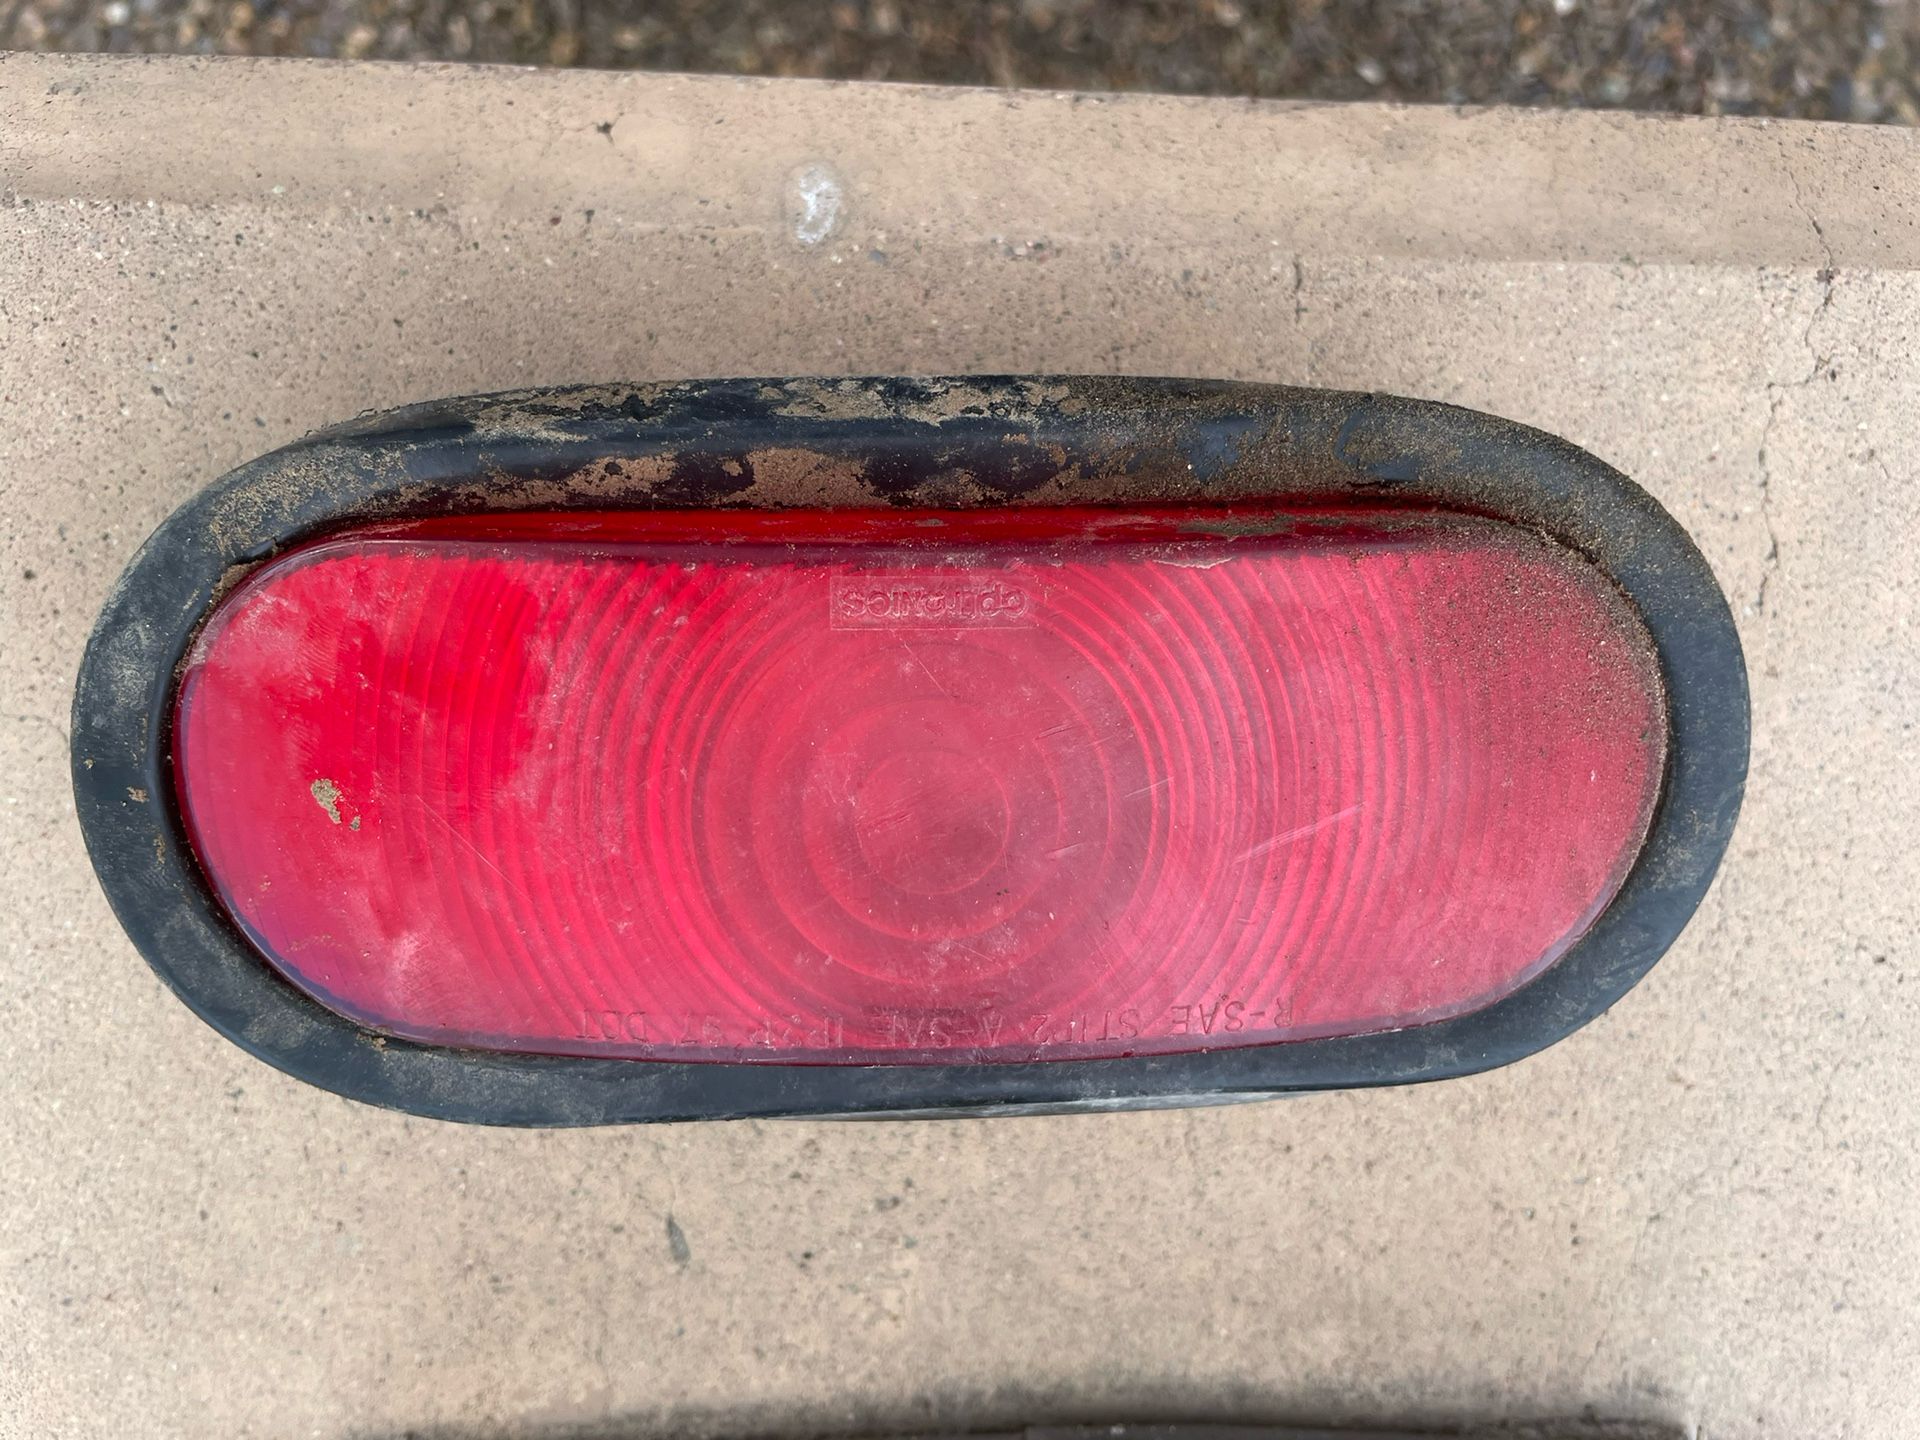 Used Oval Trailer Brake Light Lens With Rubber Grommet Missing Plug, Landscaping Automotive Car